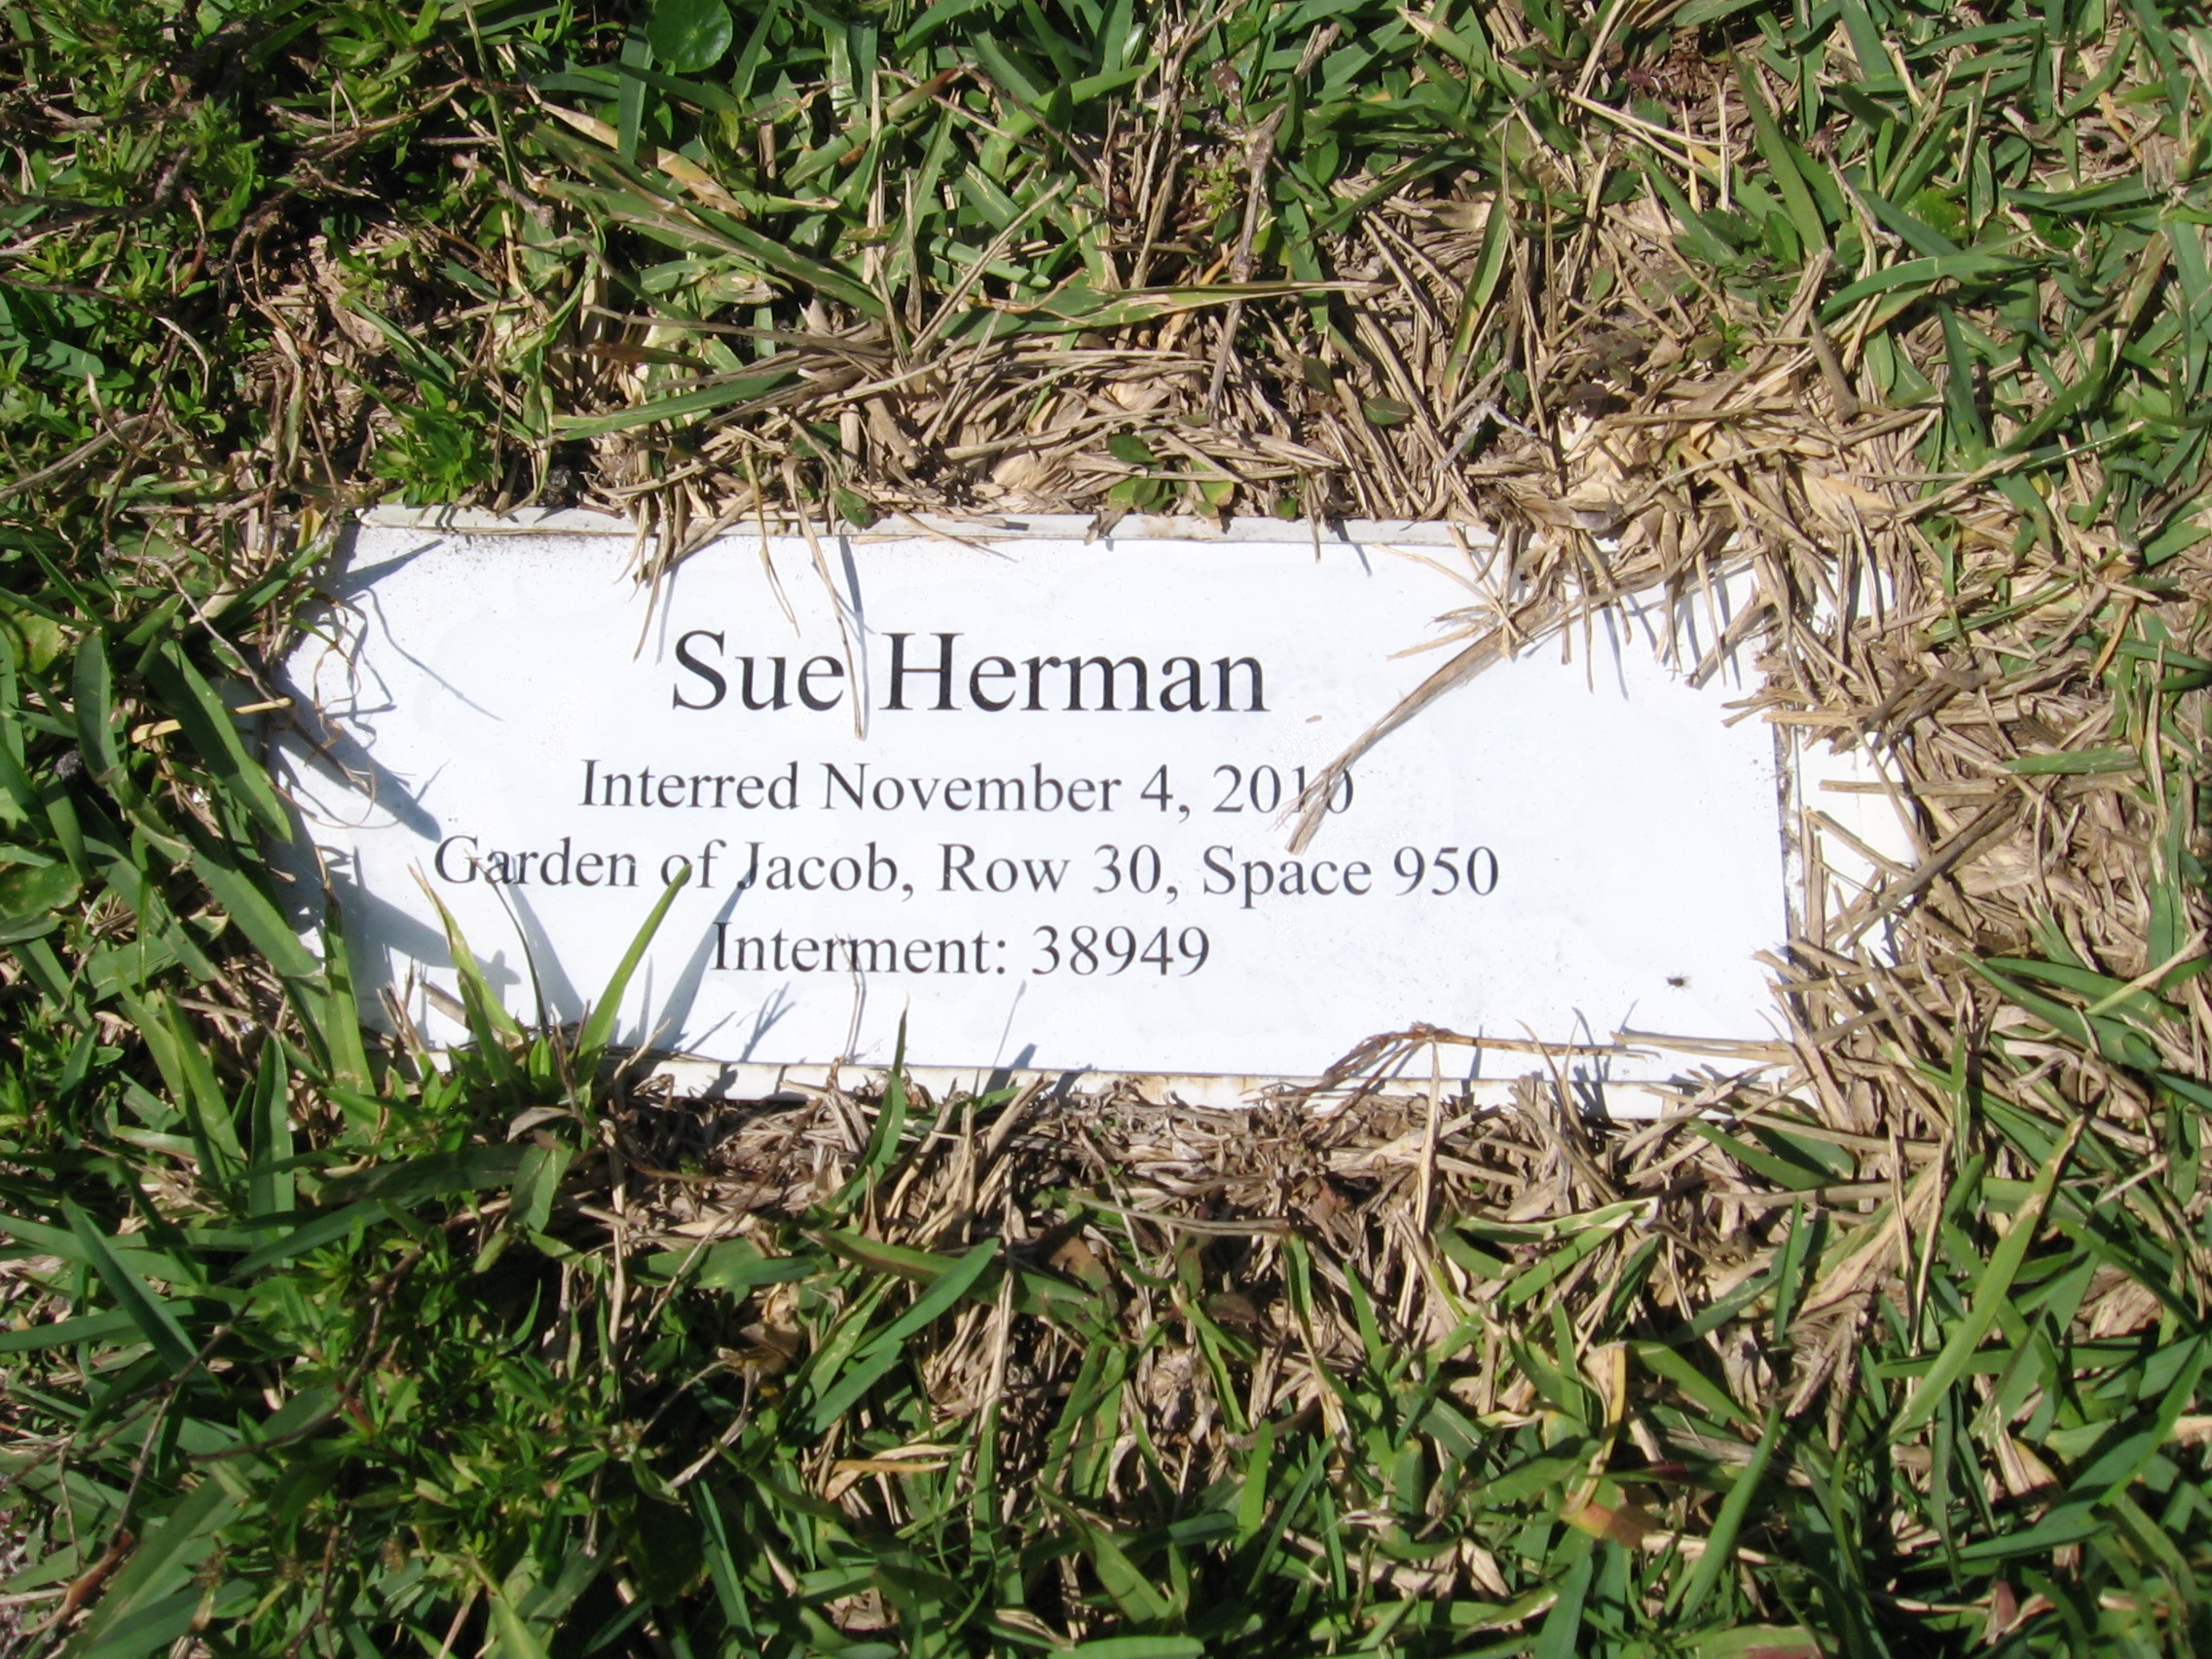 Sue Herman